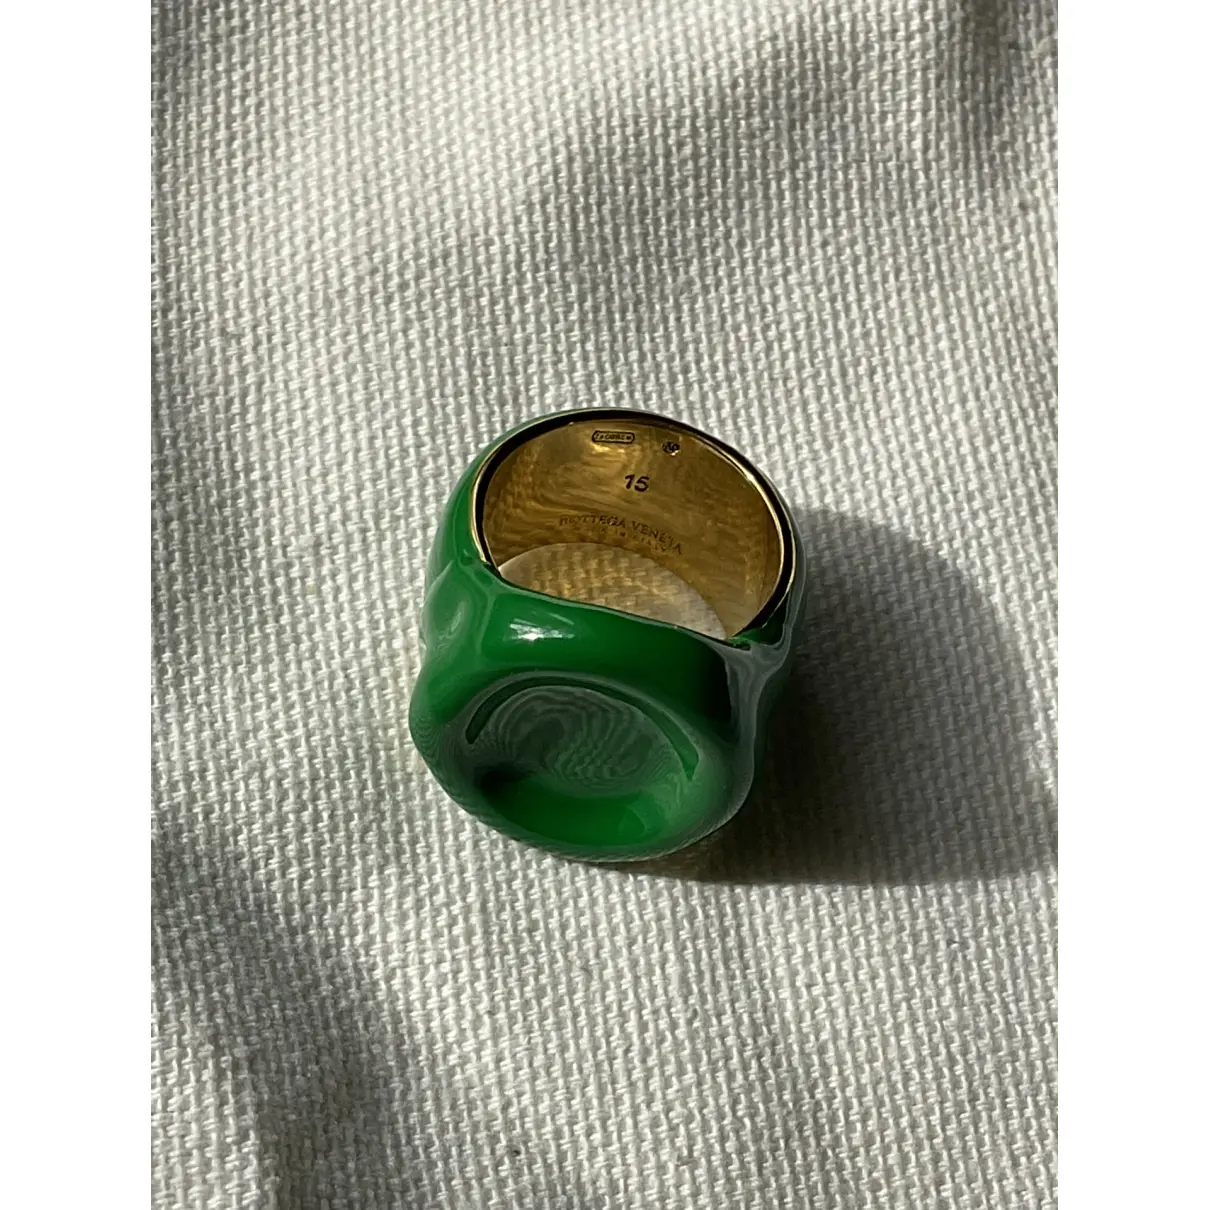 Silver ring Bottega Veneta